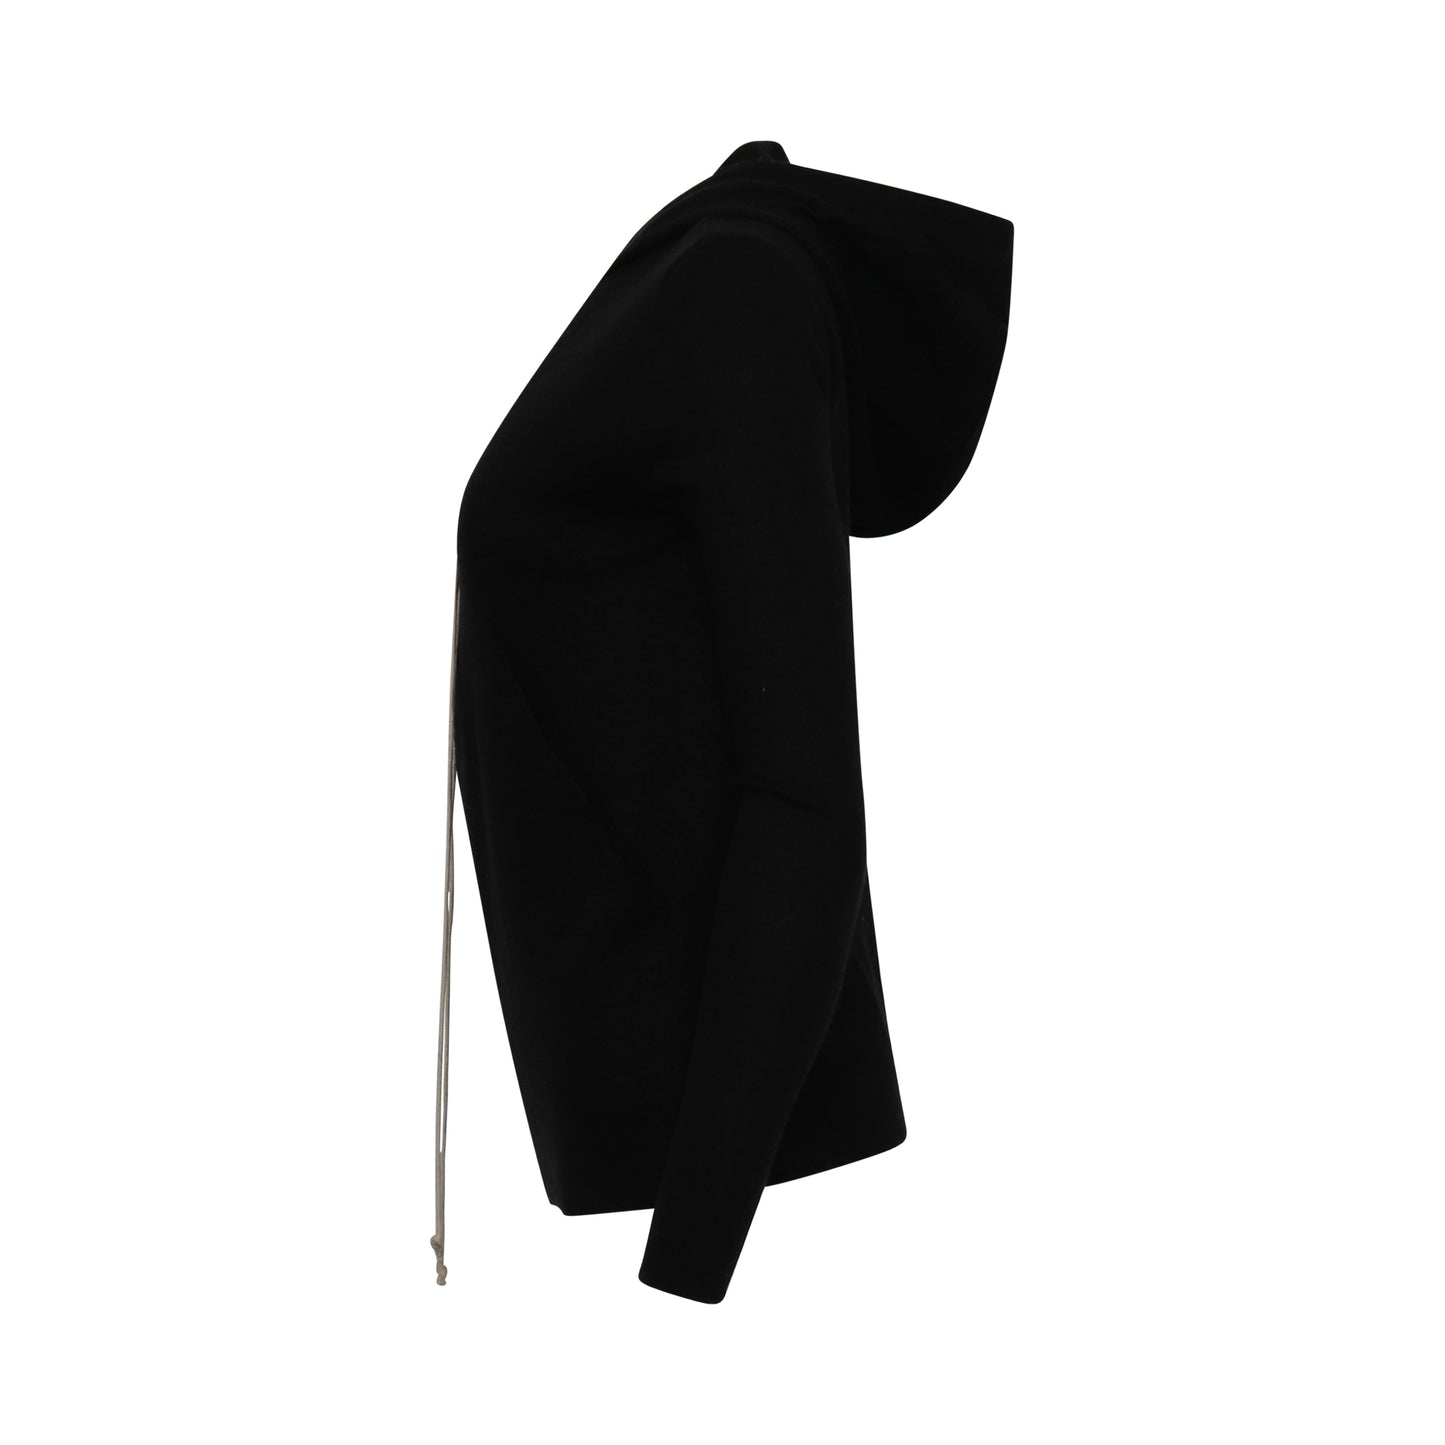 Zipped Knit Cardigan in Black